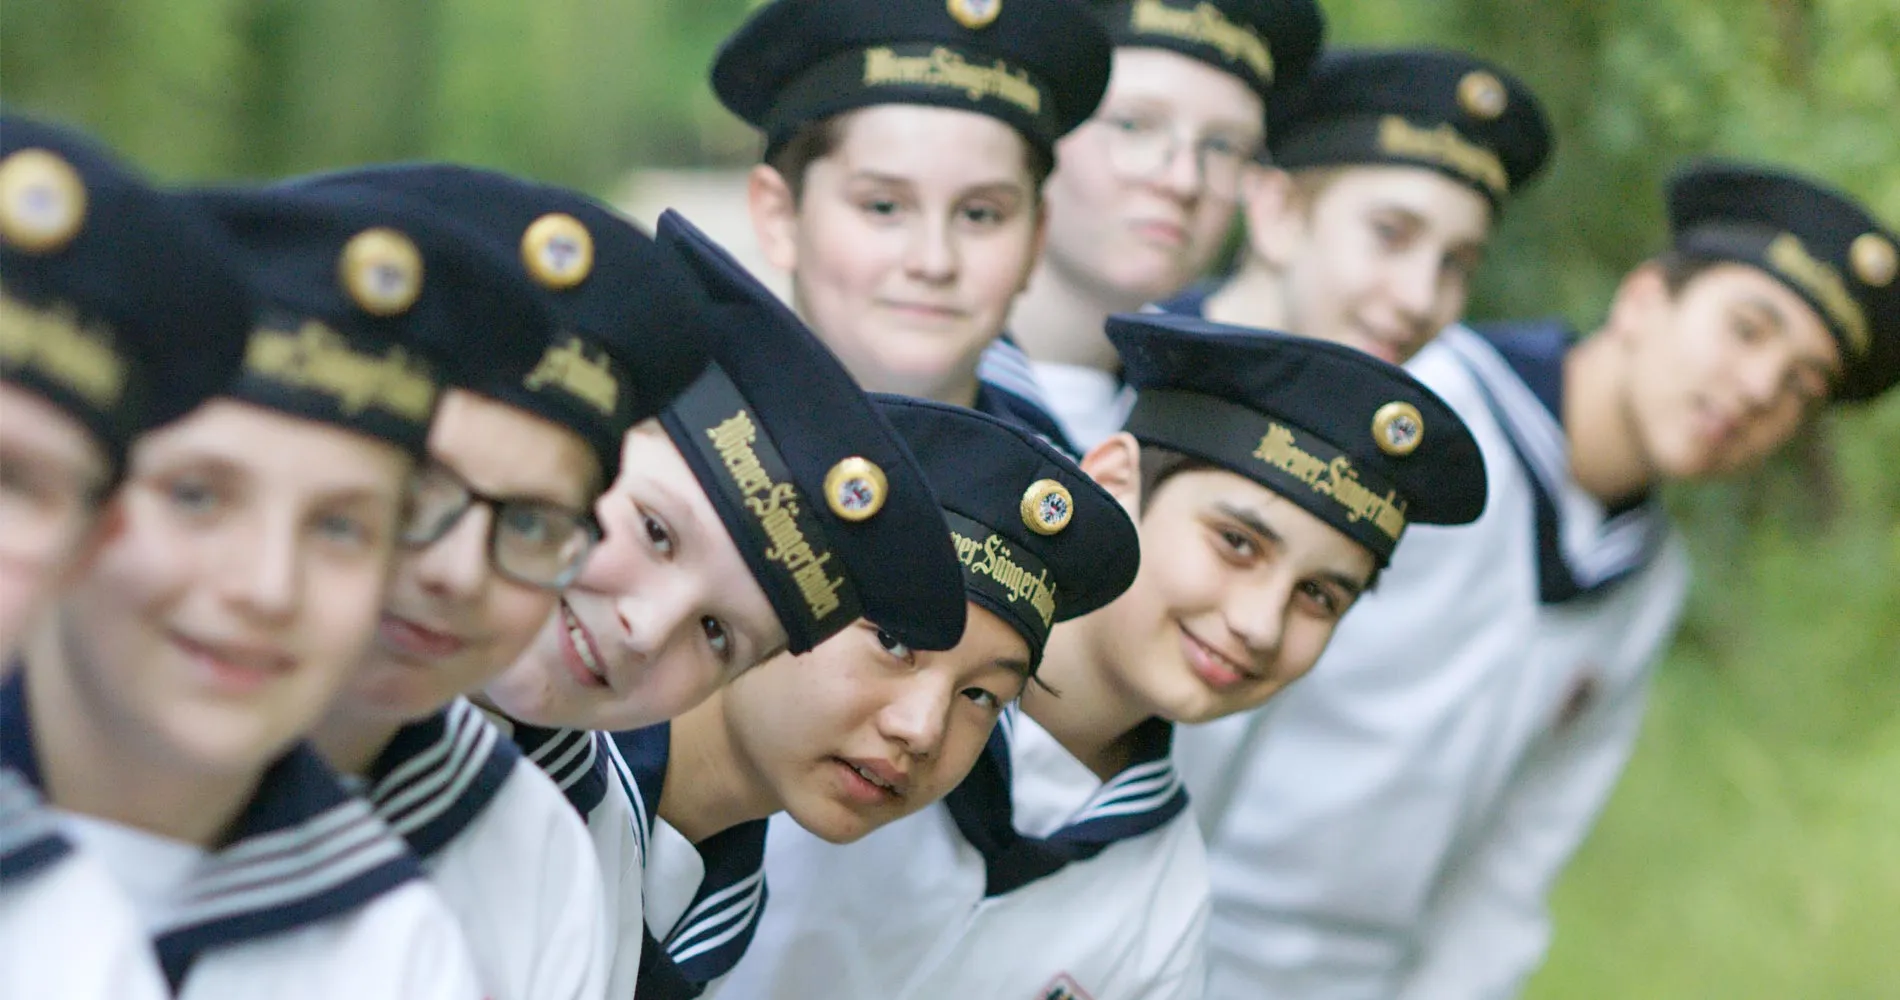 The Vienna Boys Choir: A UNESCO World Heritage Celebrates its 525th Anniversary